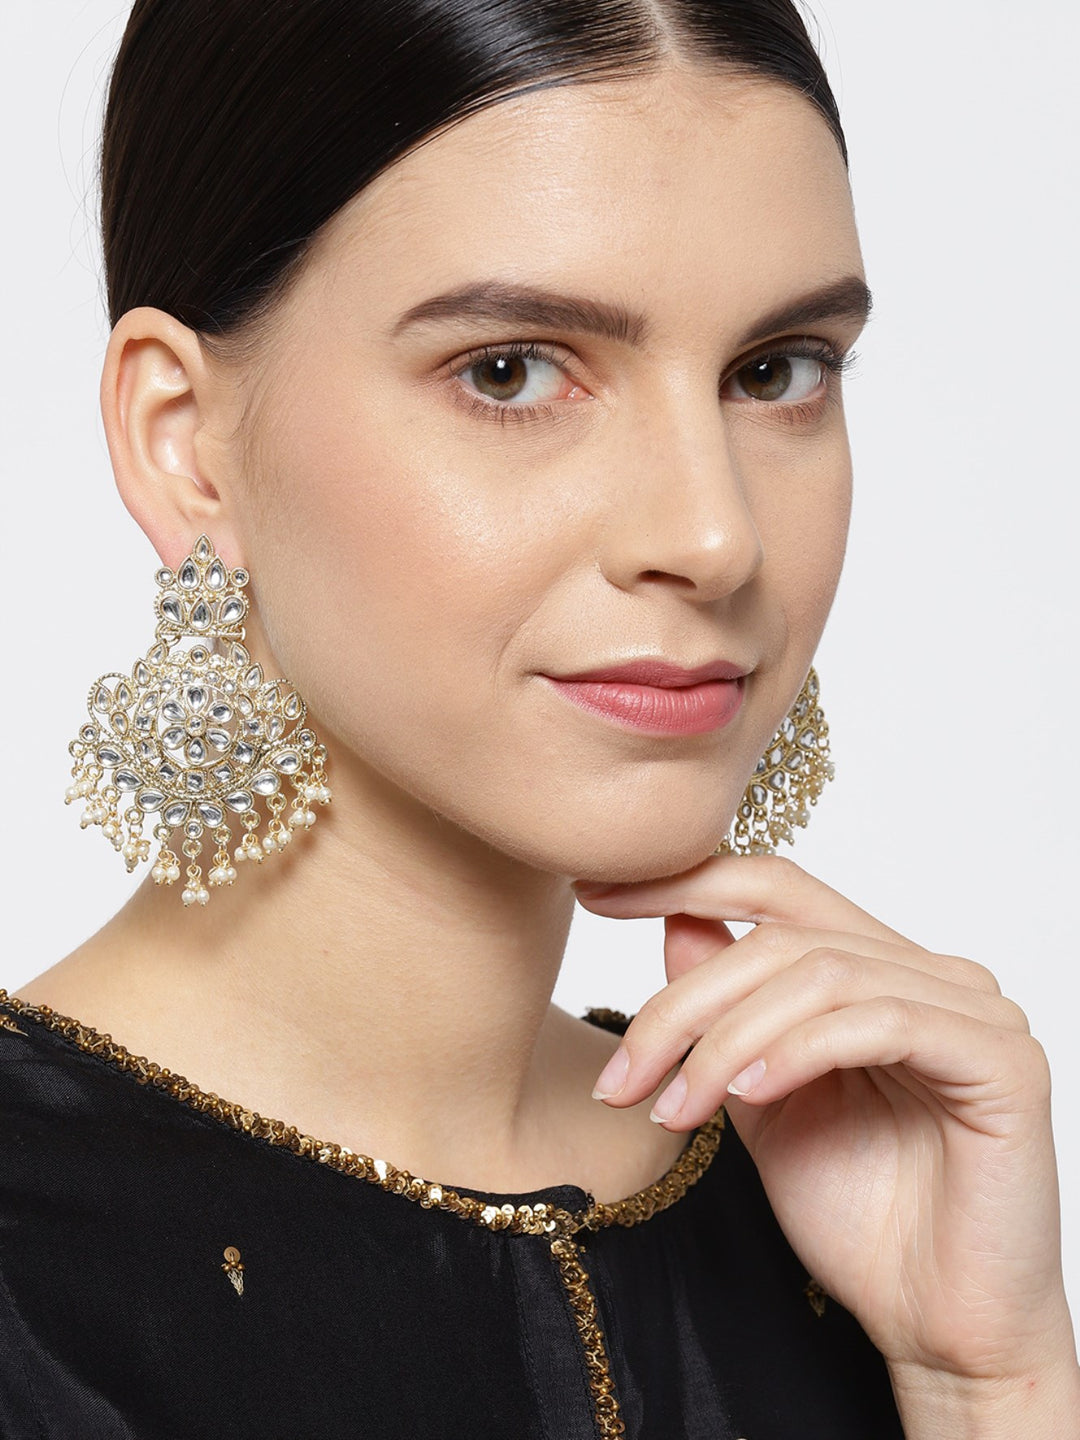 Designer Geometric Shape Gold Plated Kundan Stylish Earrings For Women And Girls